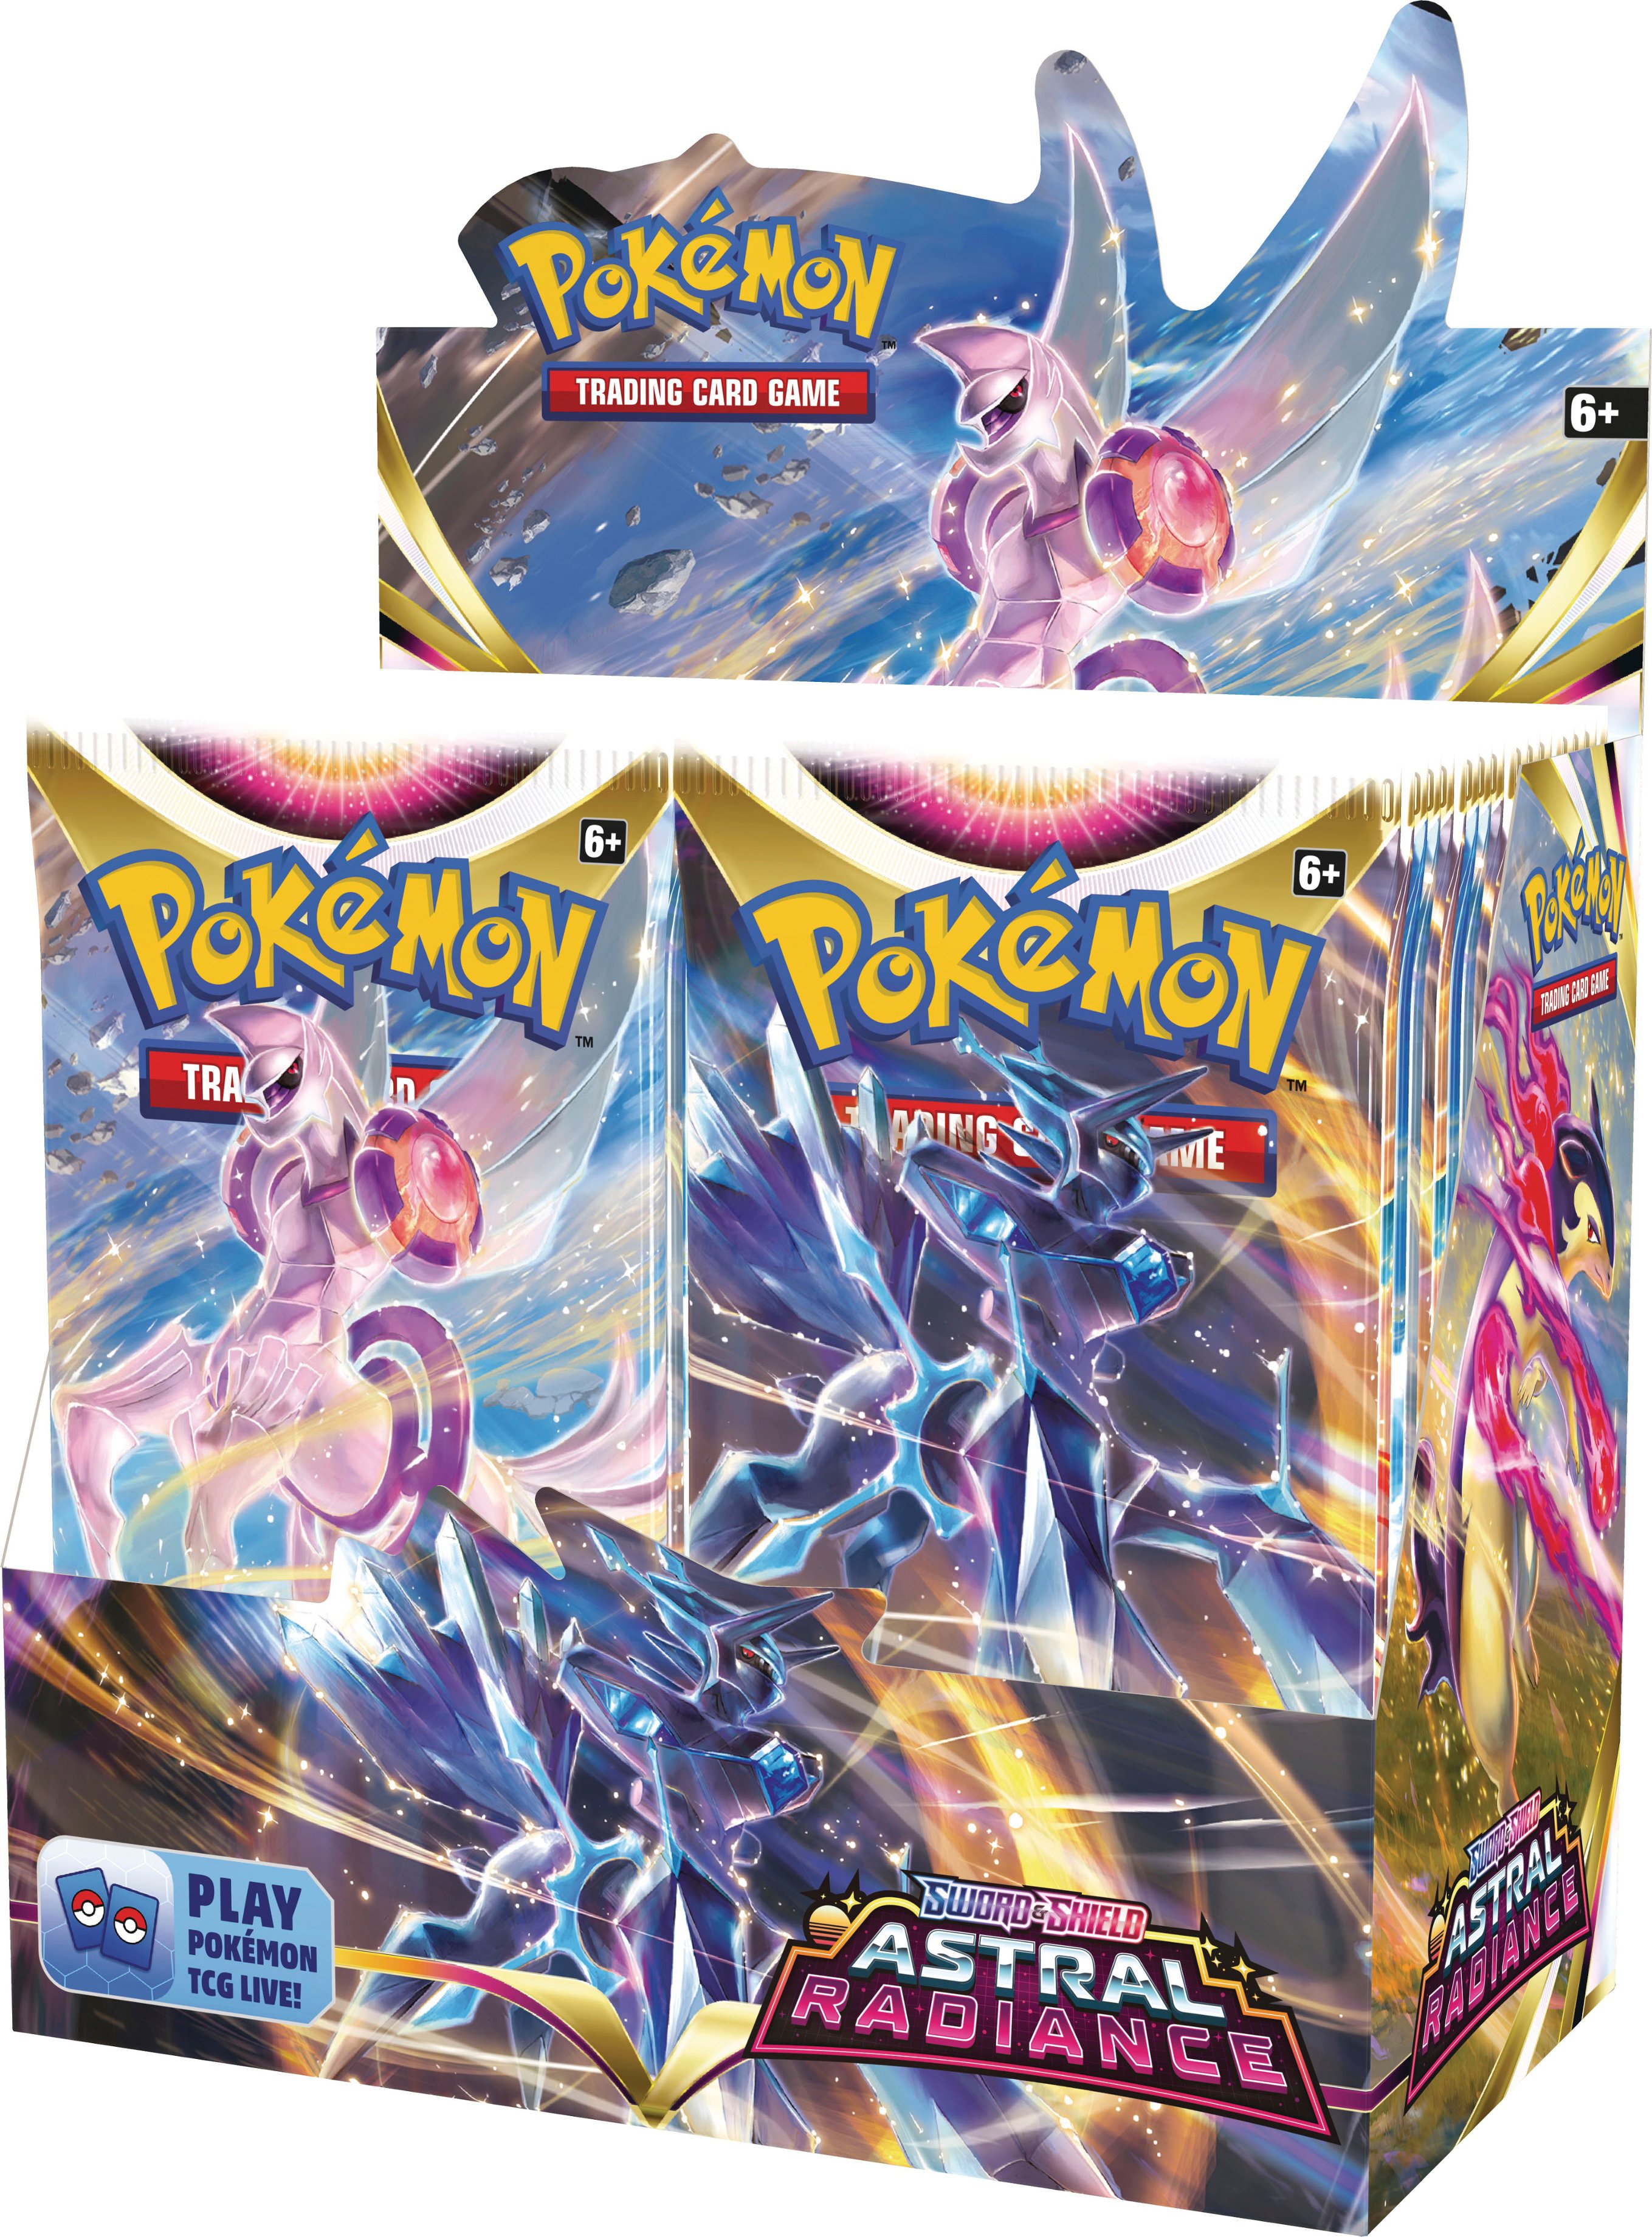 Afsnijden Ongehoorzaamheid Wakker worden Pokémon Trading Card Game: Astral Radiance Booster Box 181-87023 - Best Buy